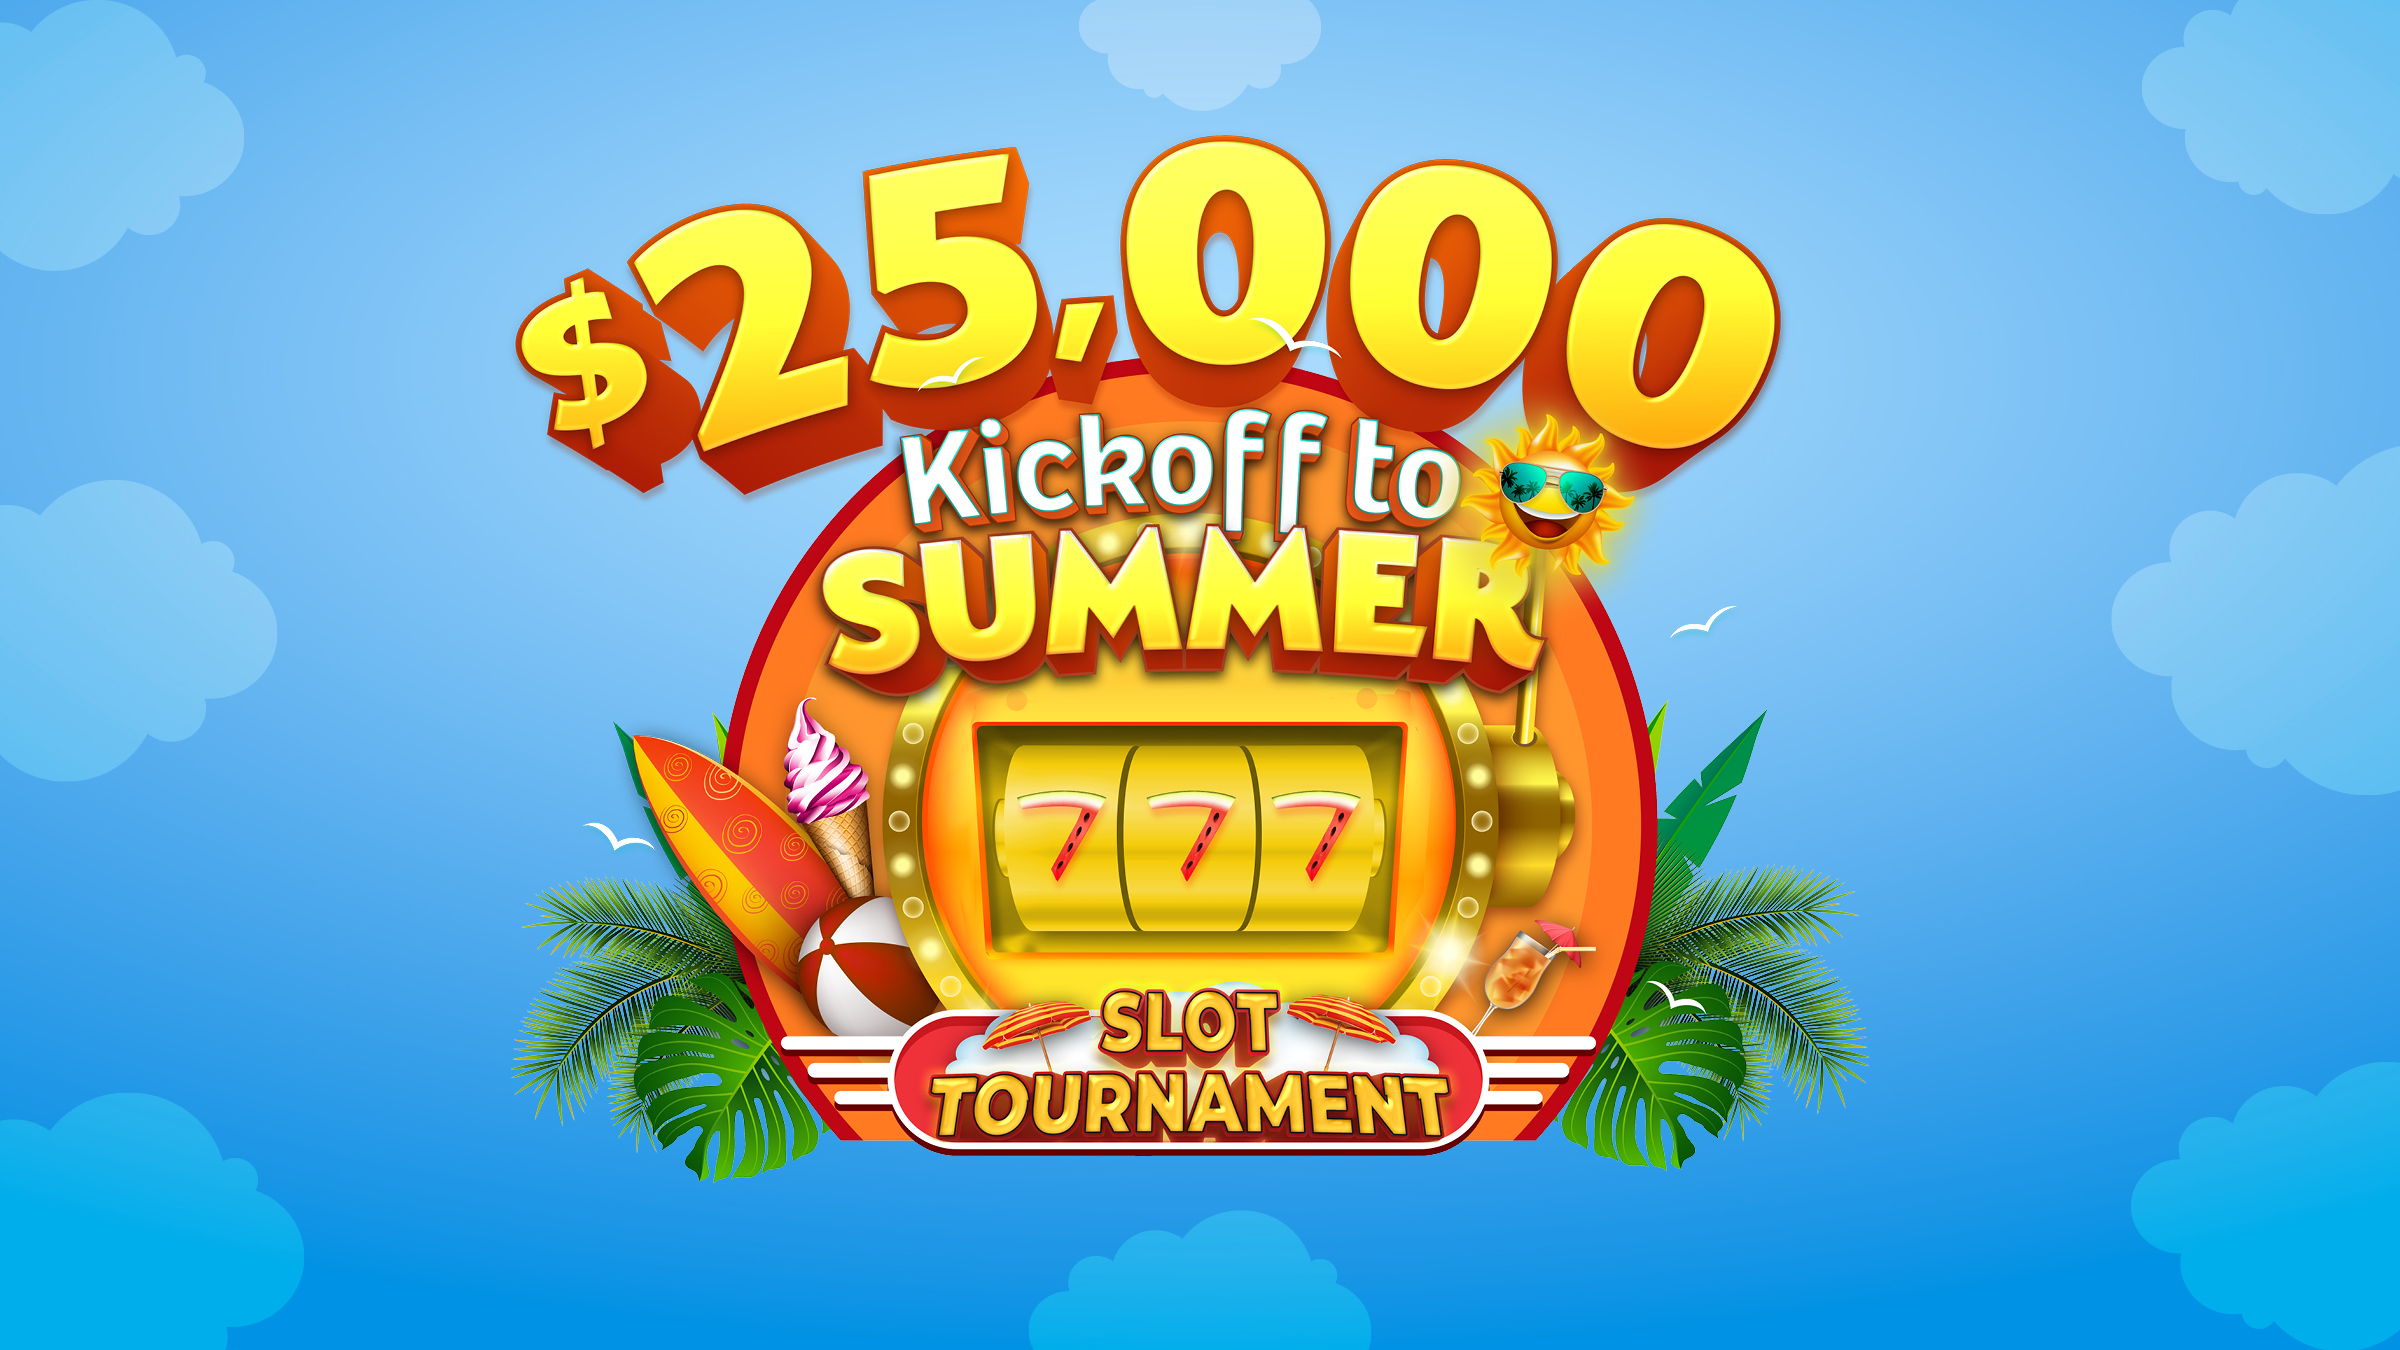 $25,000 Kickoff to summer Slot Tournament